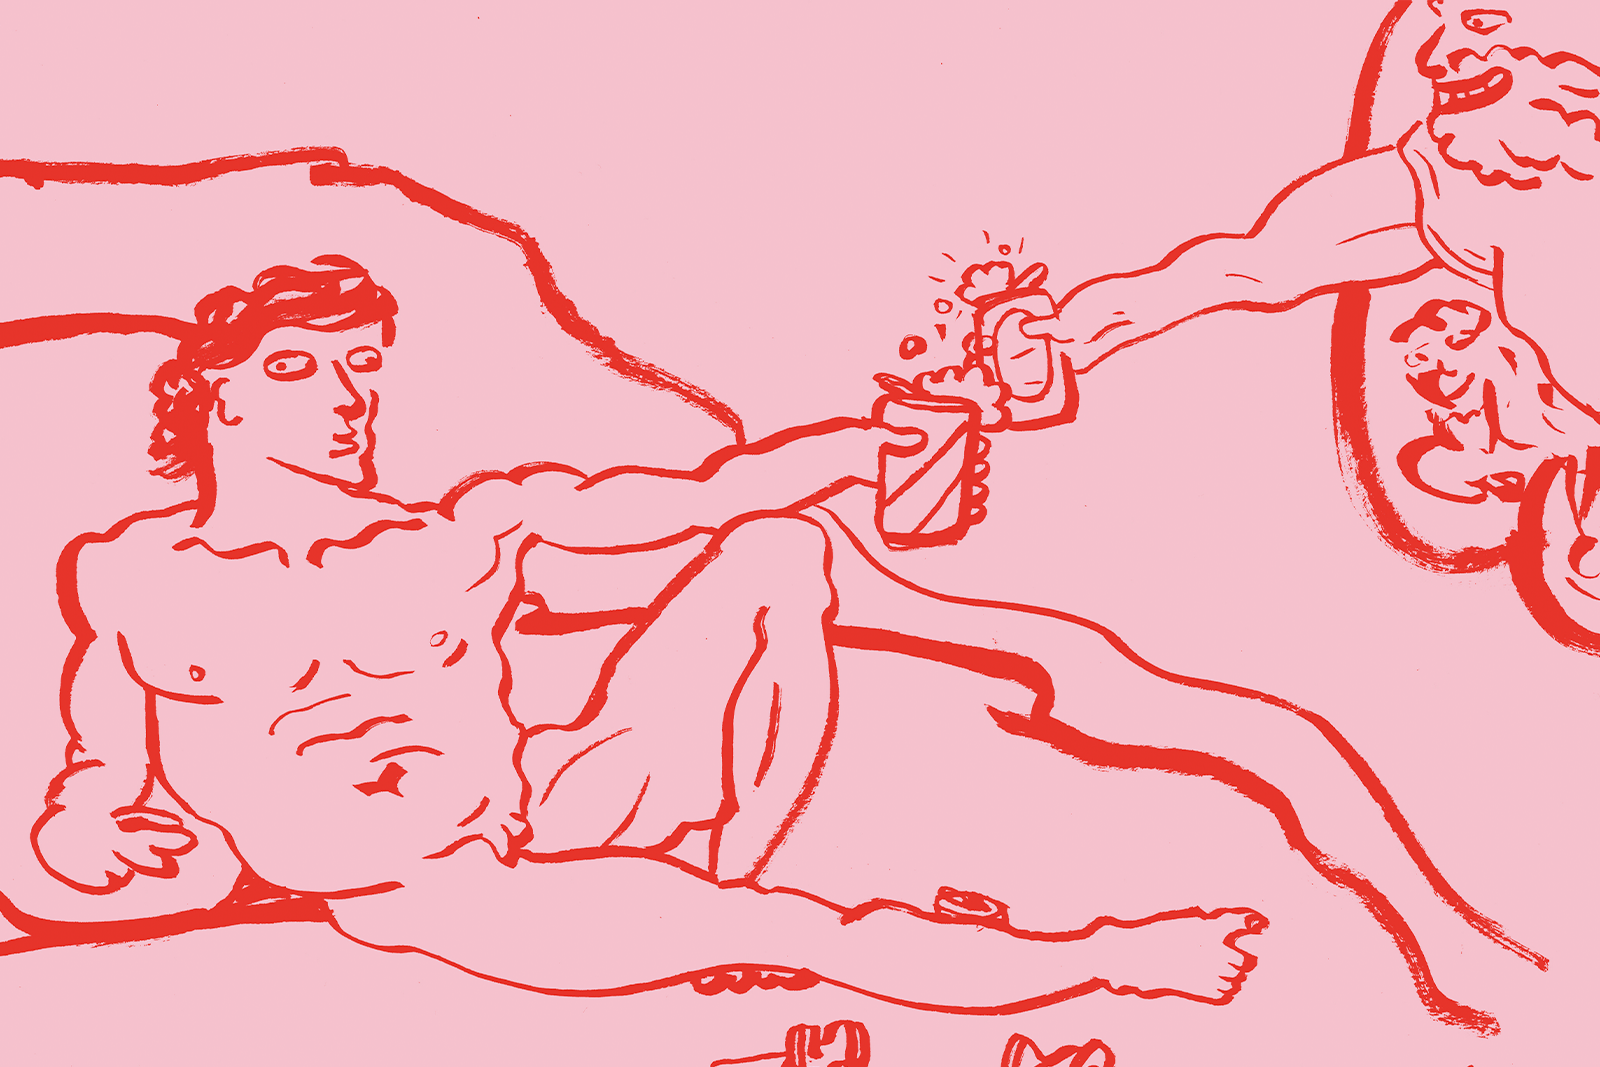 Crush Beer-zine God Adam illustration. pink background with red 